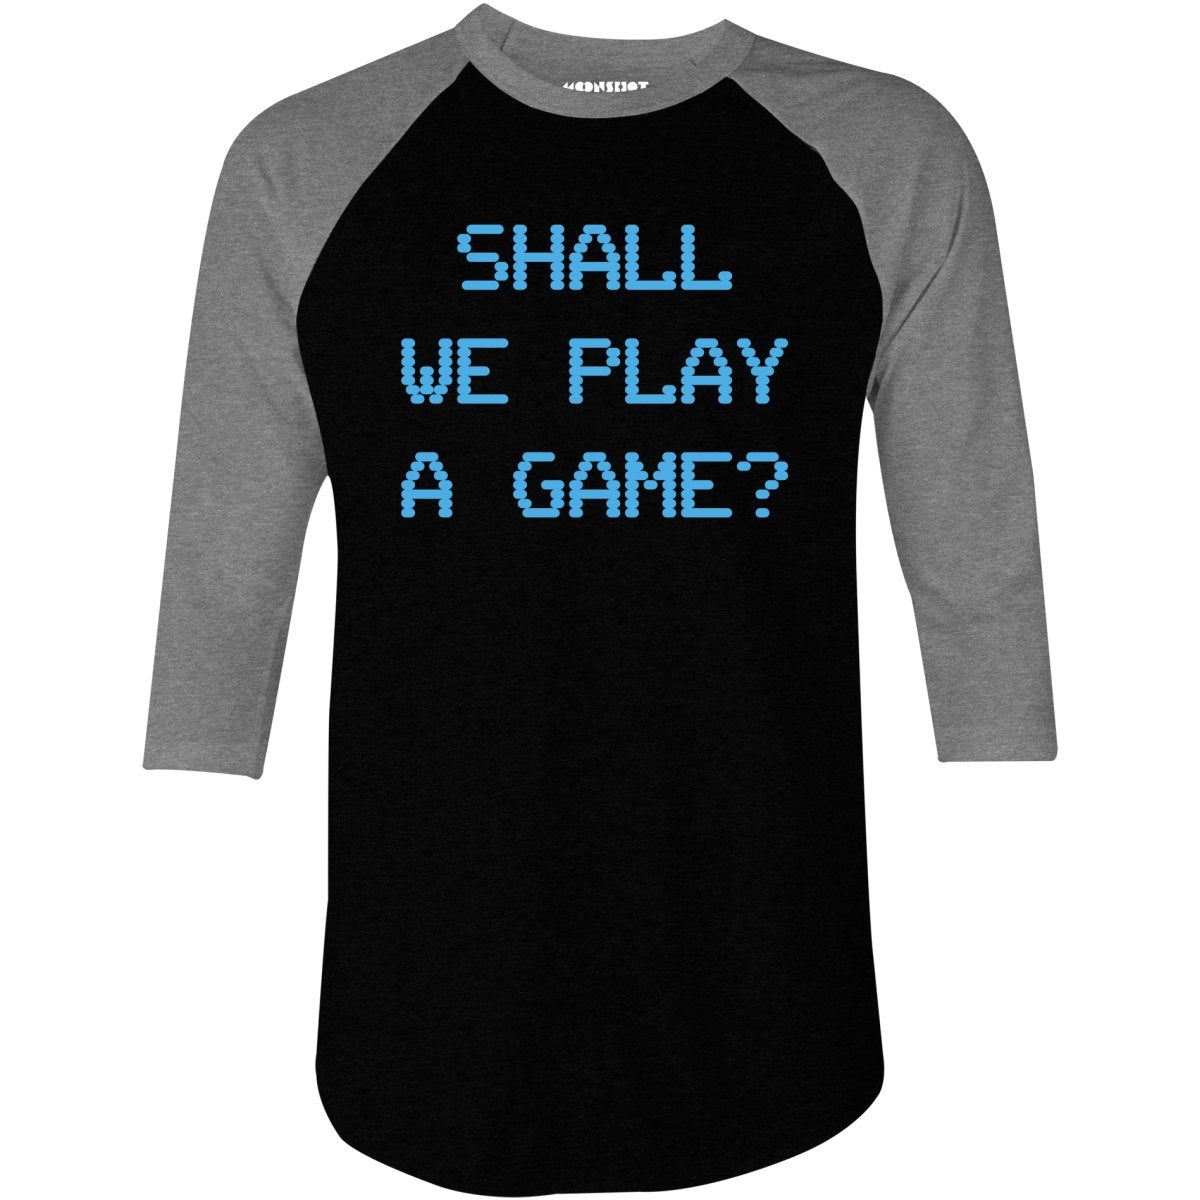 Shall We Play a Game? - 3/4 Sleeve Raglan T-Shirt